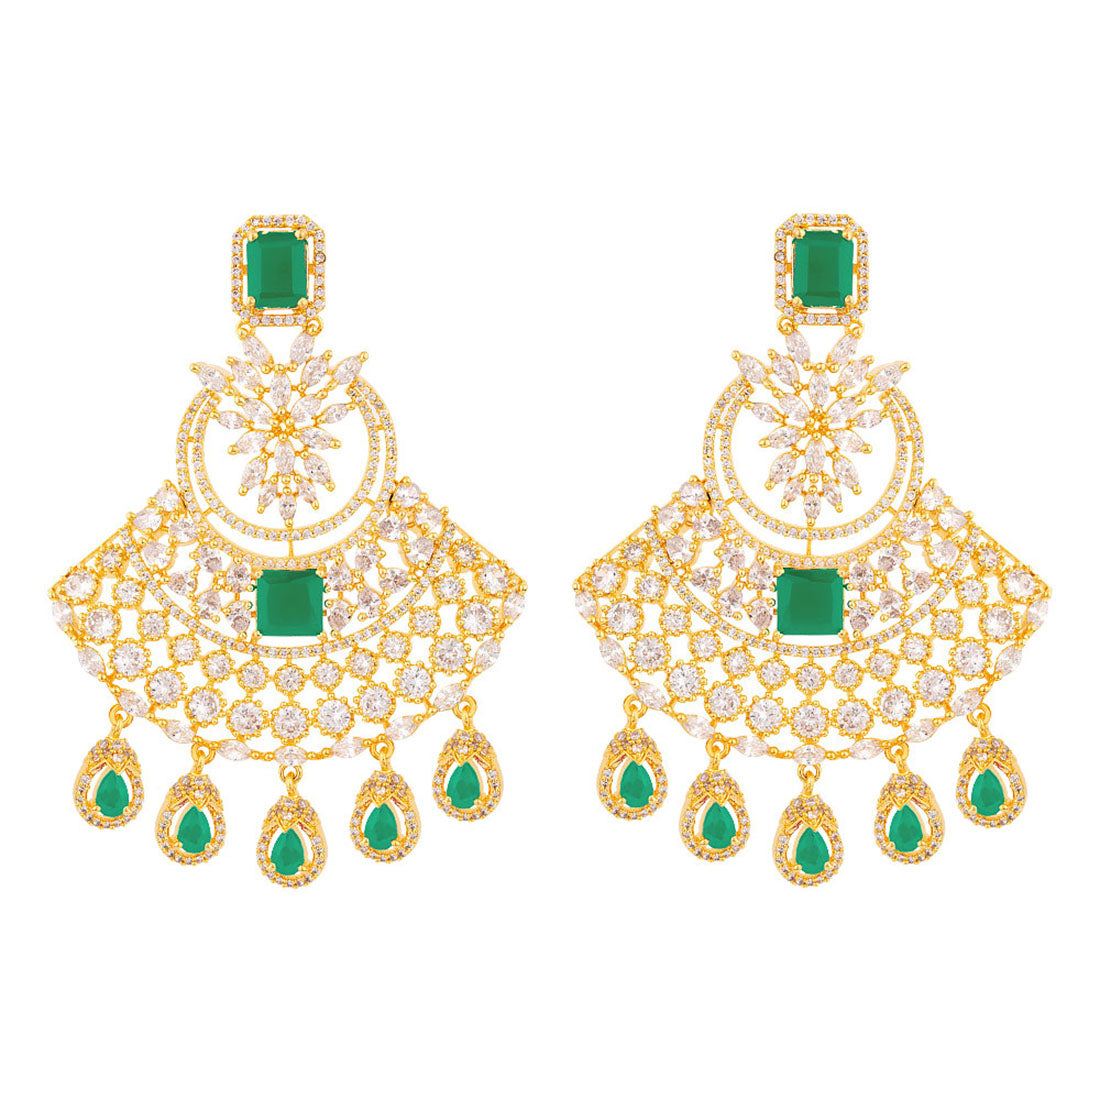 Heavily Embellished Ethnic Inspired Earrings